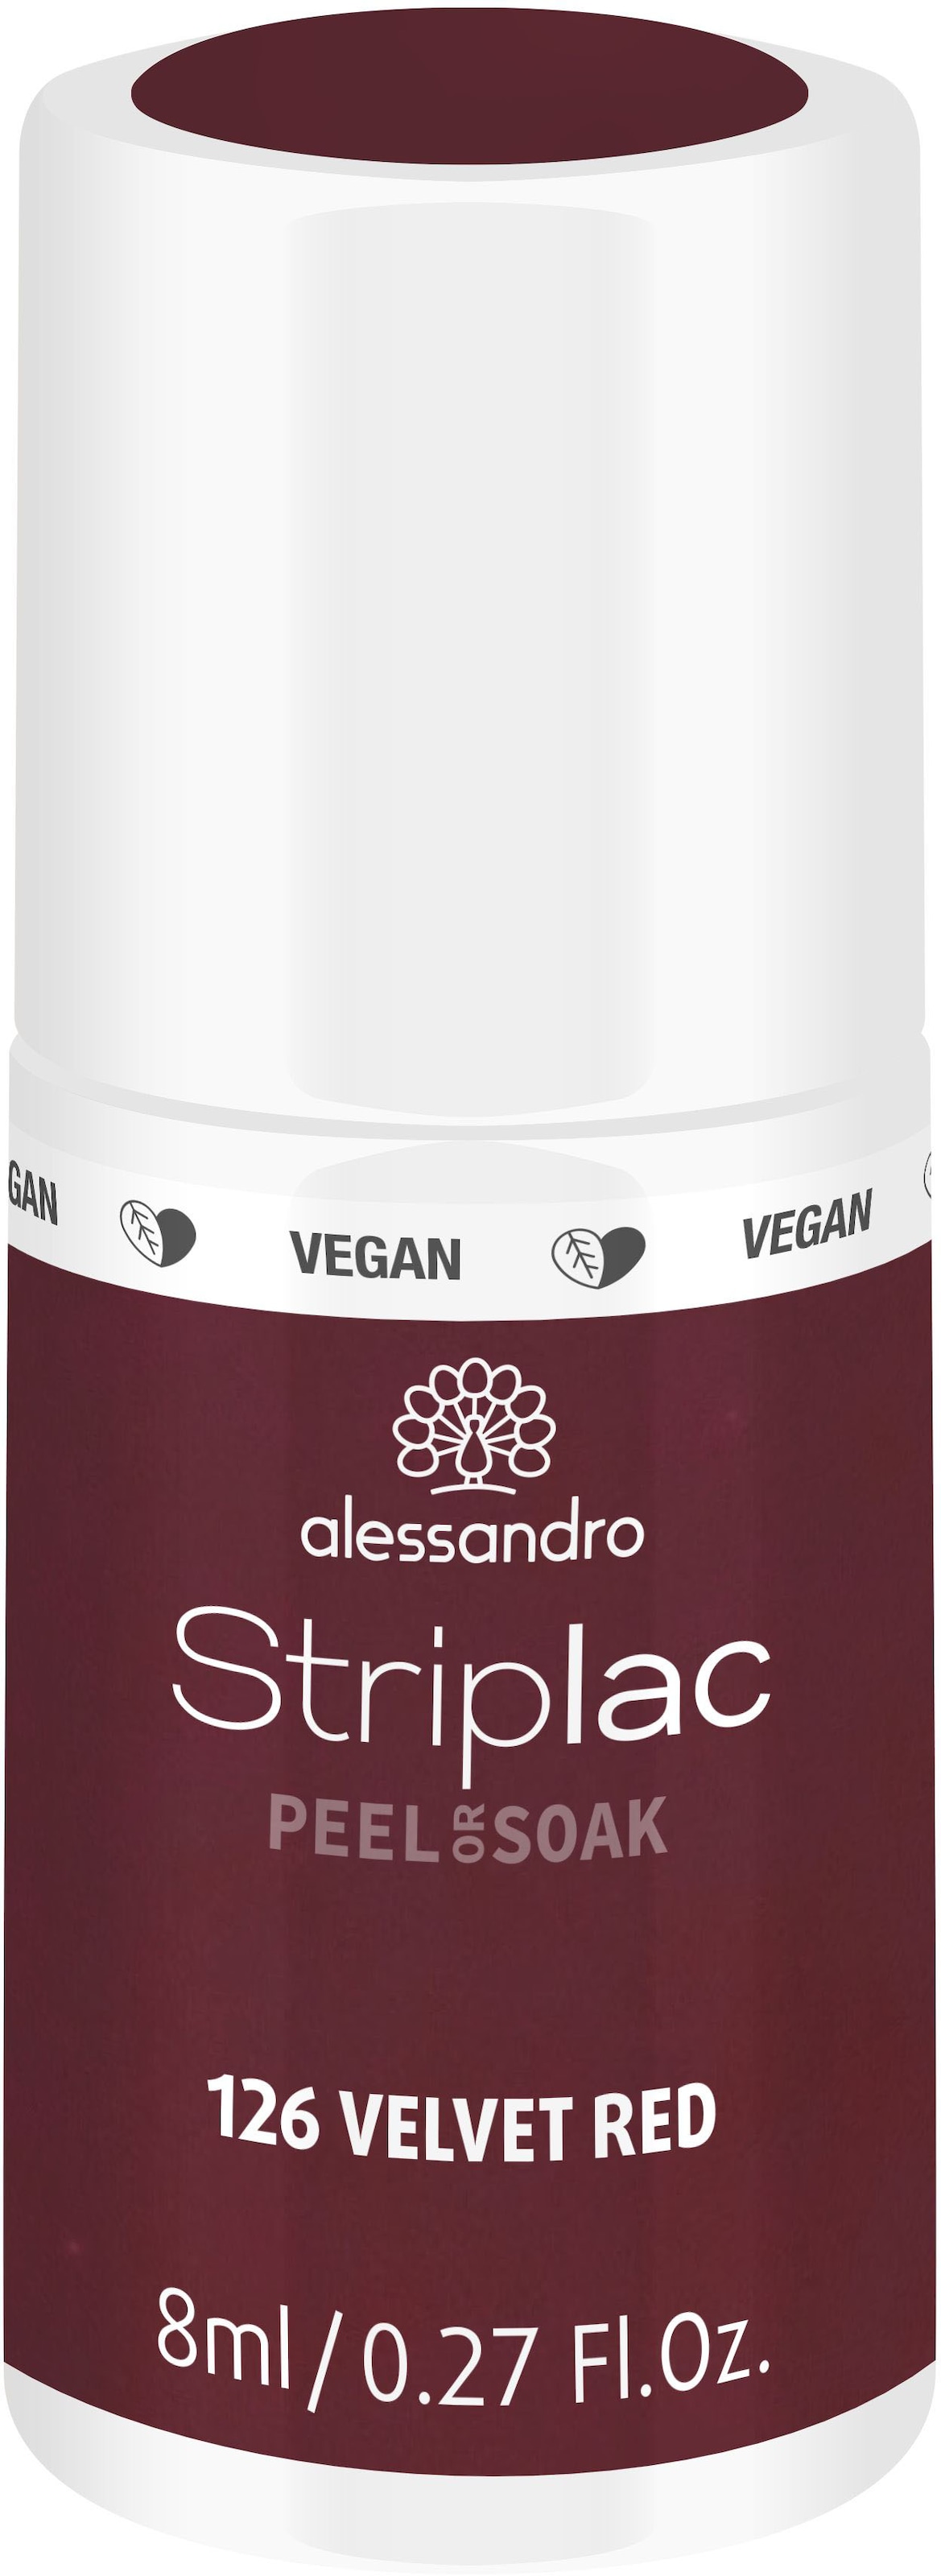 alessandro international UV-Nagellack »Striplac Online vegan im SOAK«, OR OTTO Shop PEEL